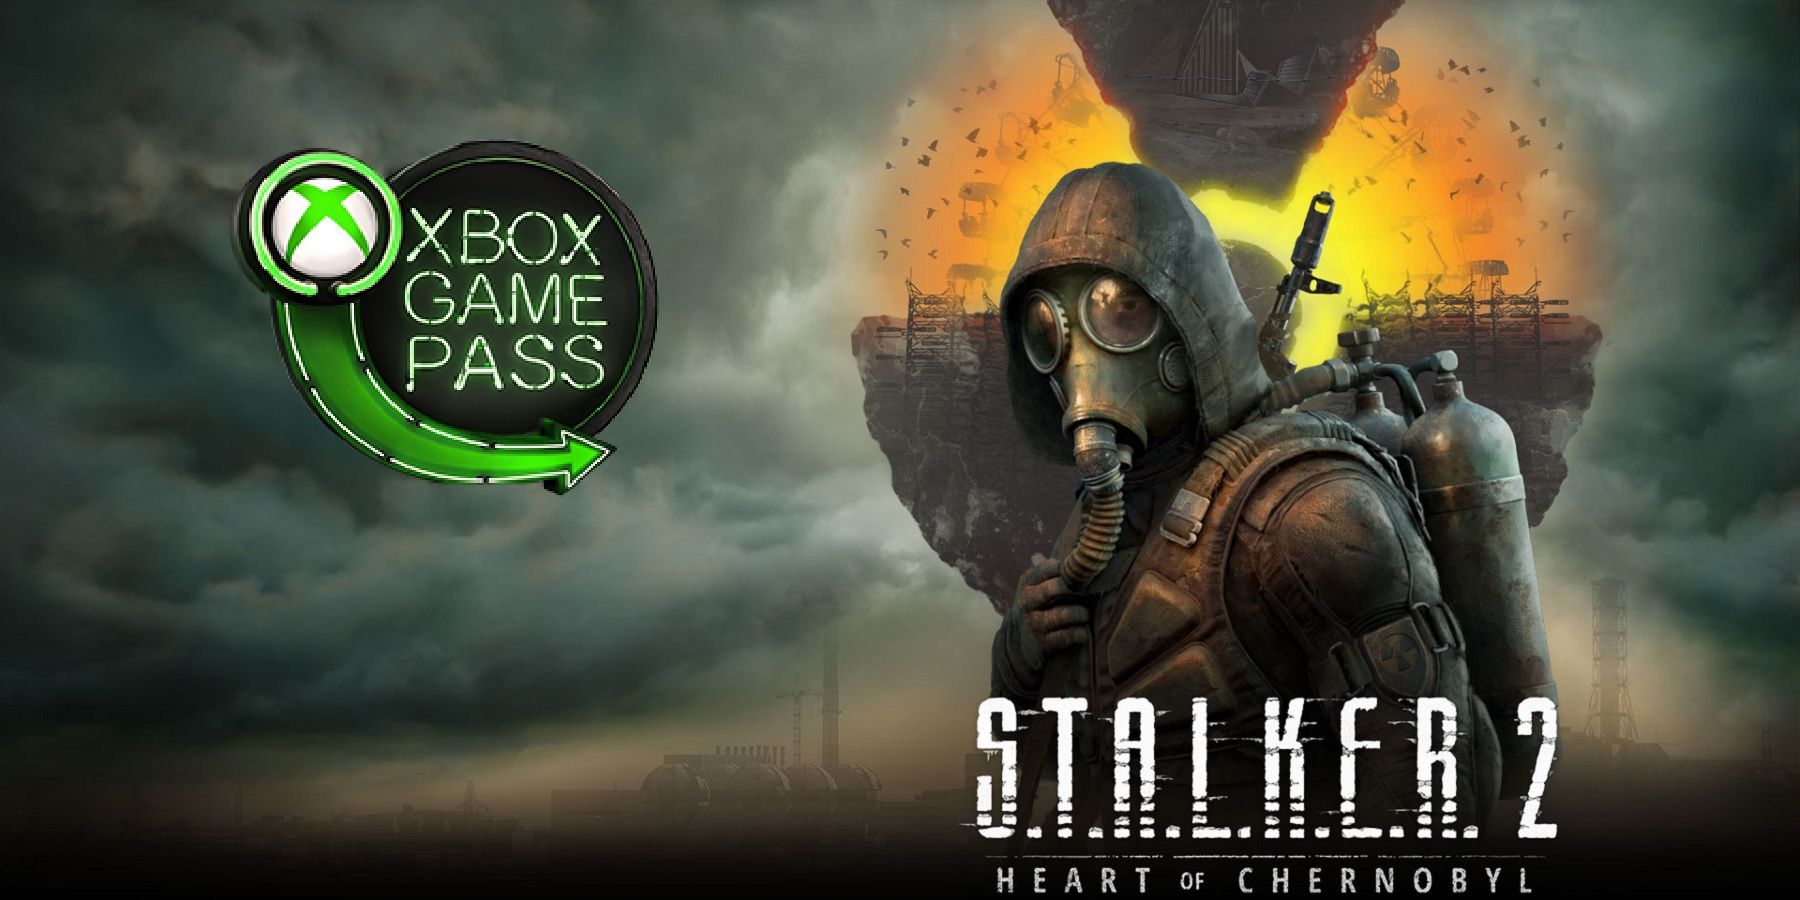 stalker 2 xbox game pass logo